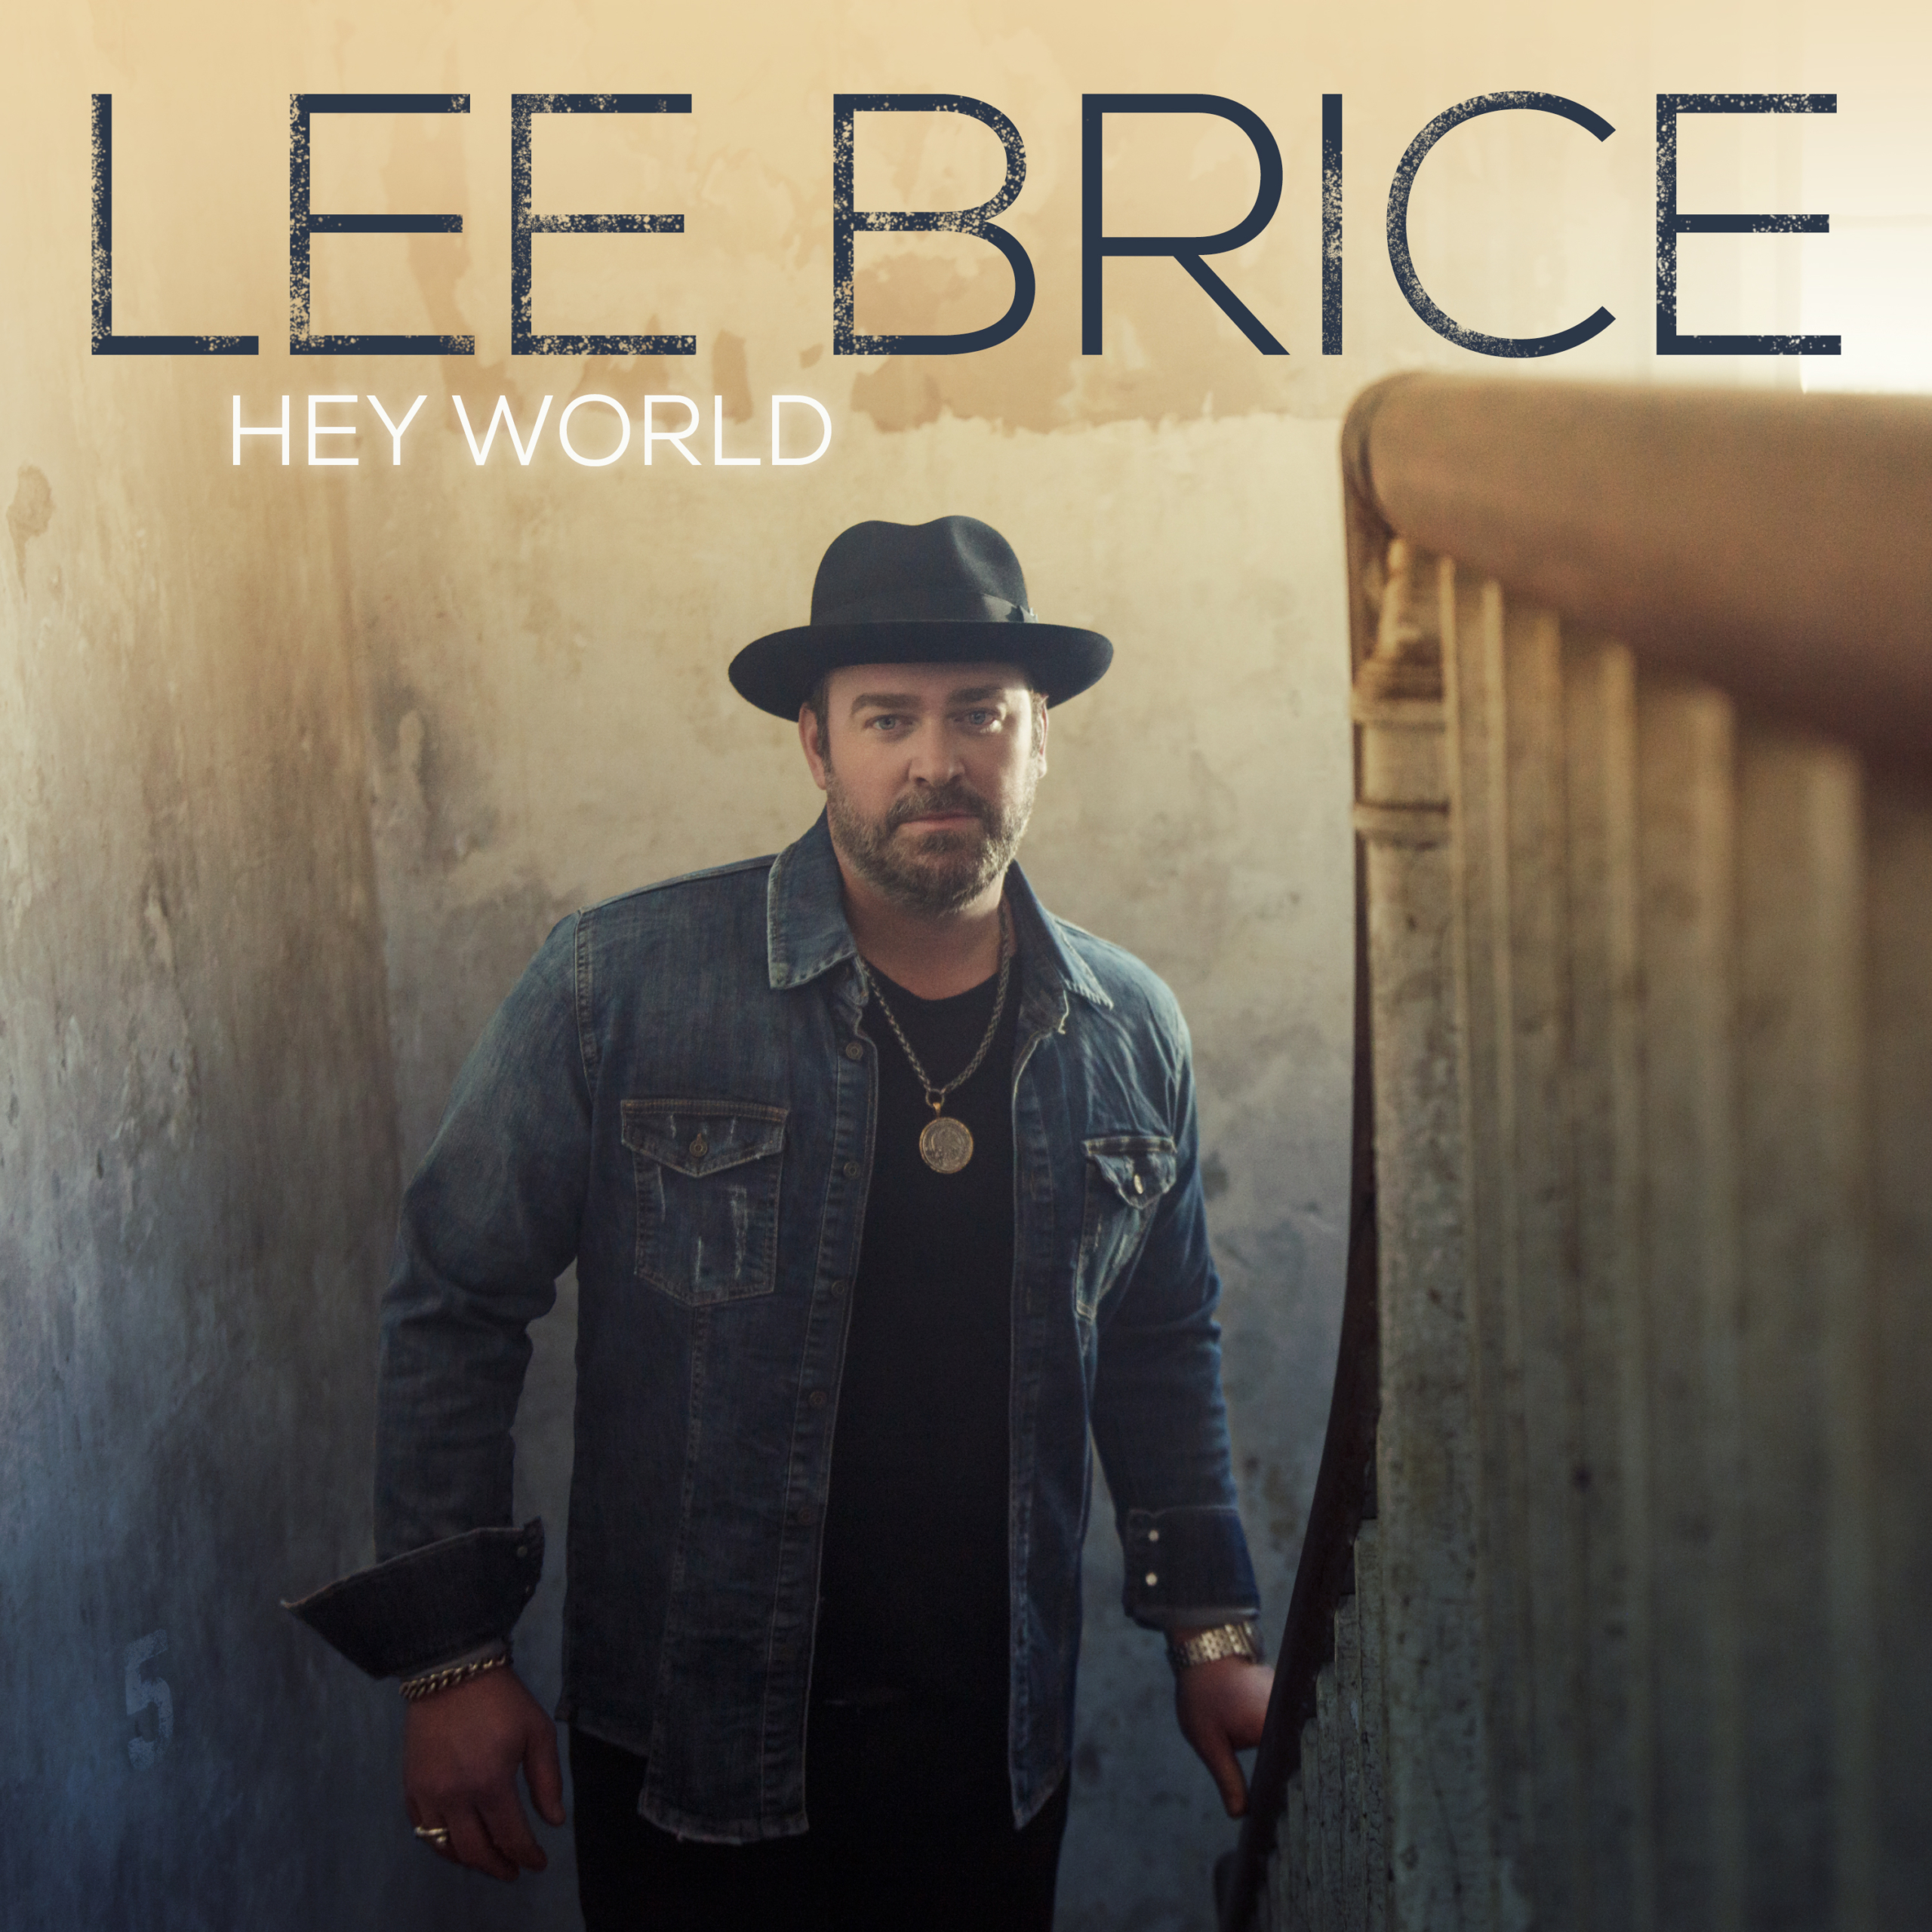 Lee Brice new album Hey World